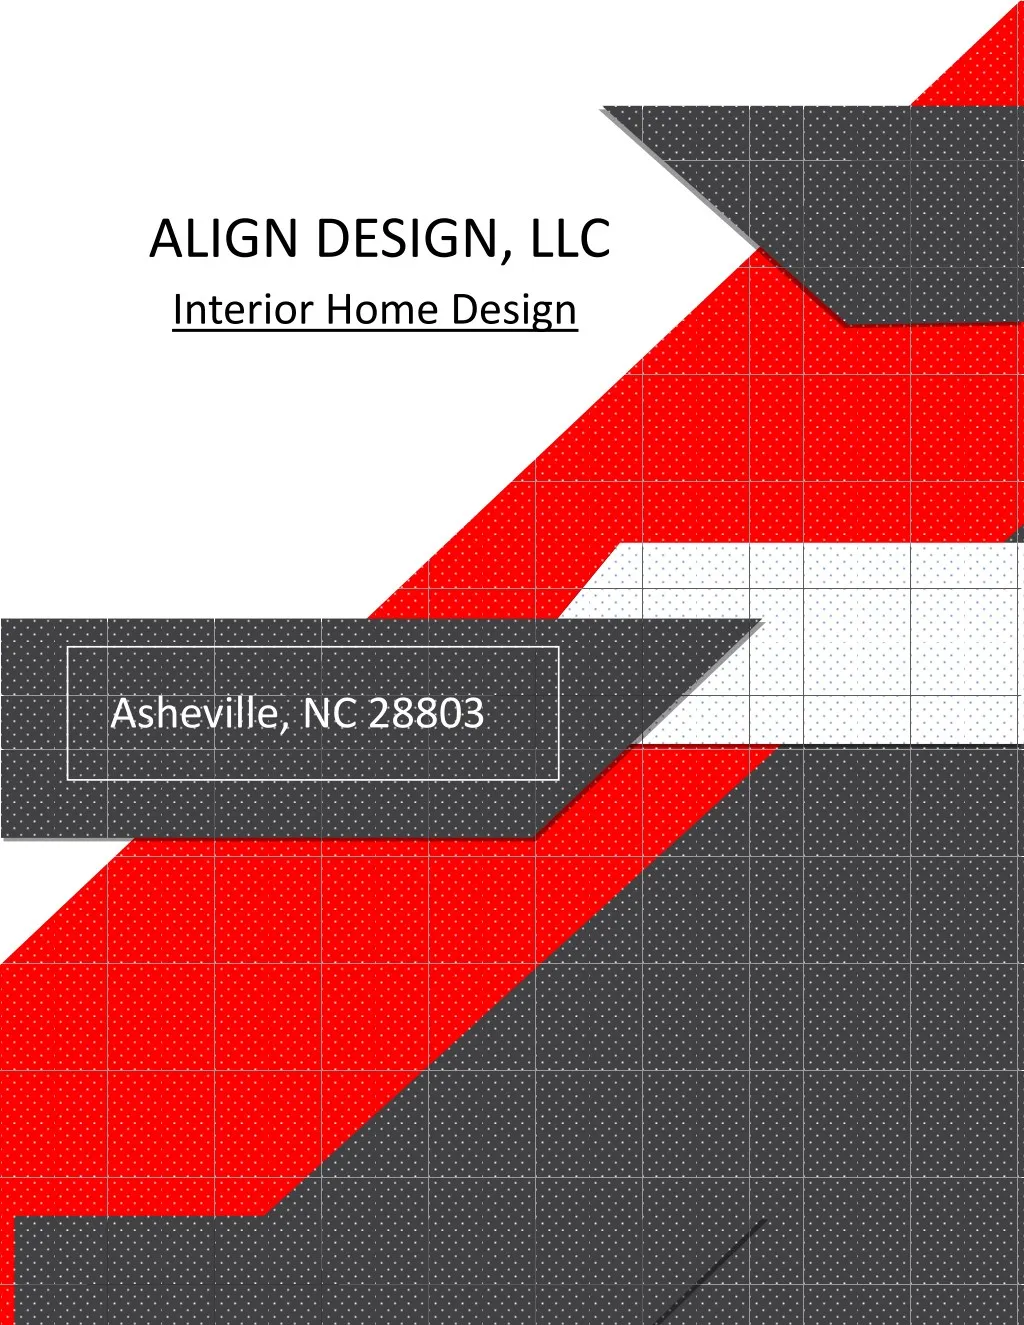 align design llc interior home design n.